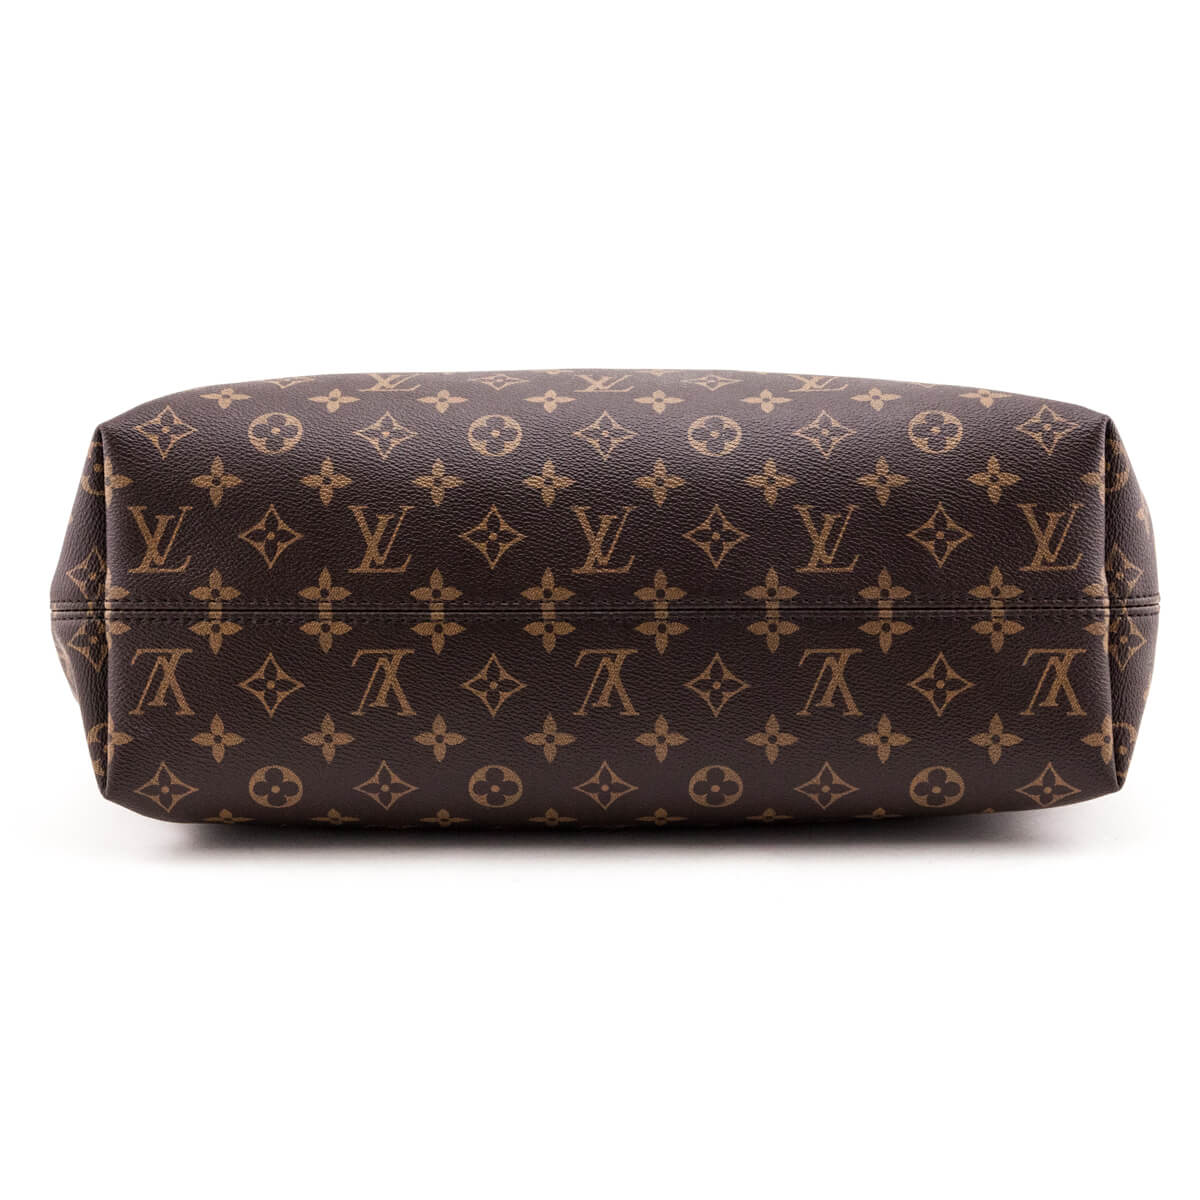 Louis Vuitton Monogram Graceful MM - Love that Bag etc - Preowned Authentic Designer Handbags & Preloved Fashions